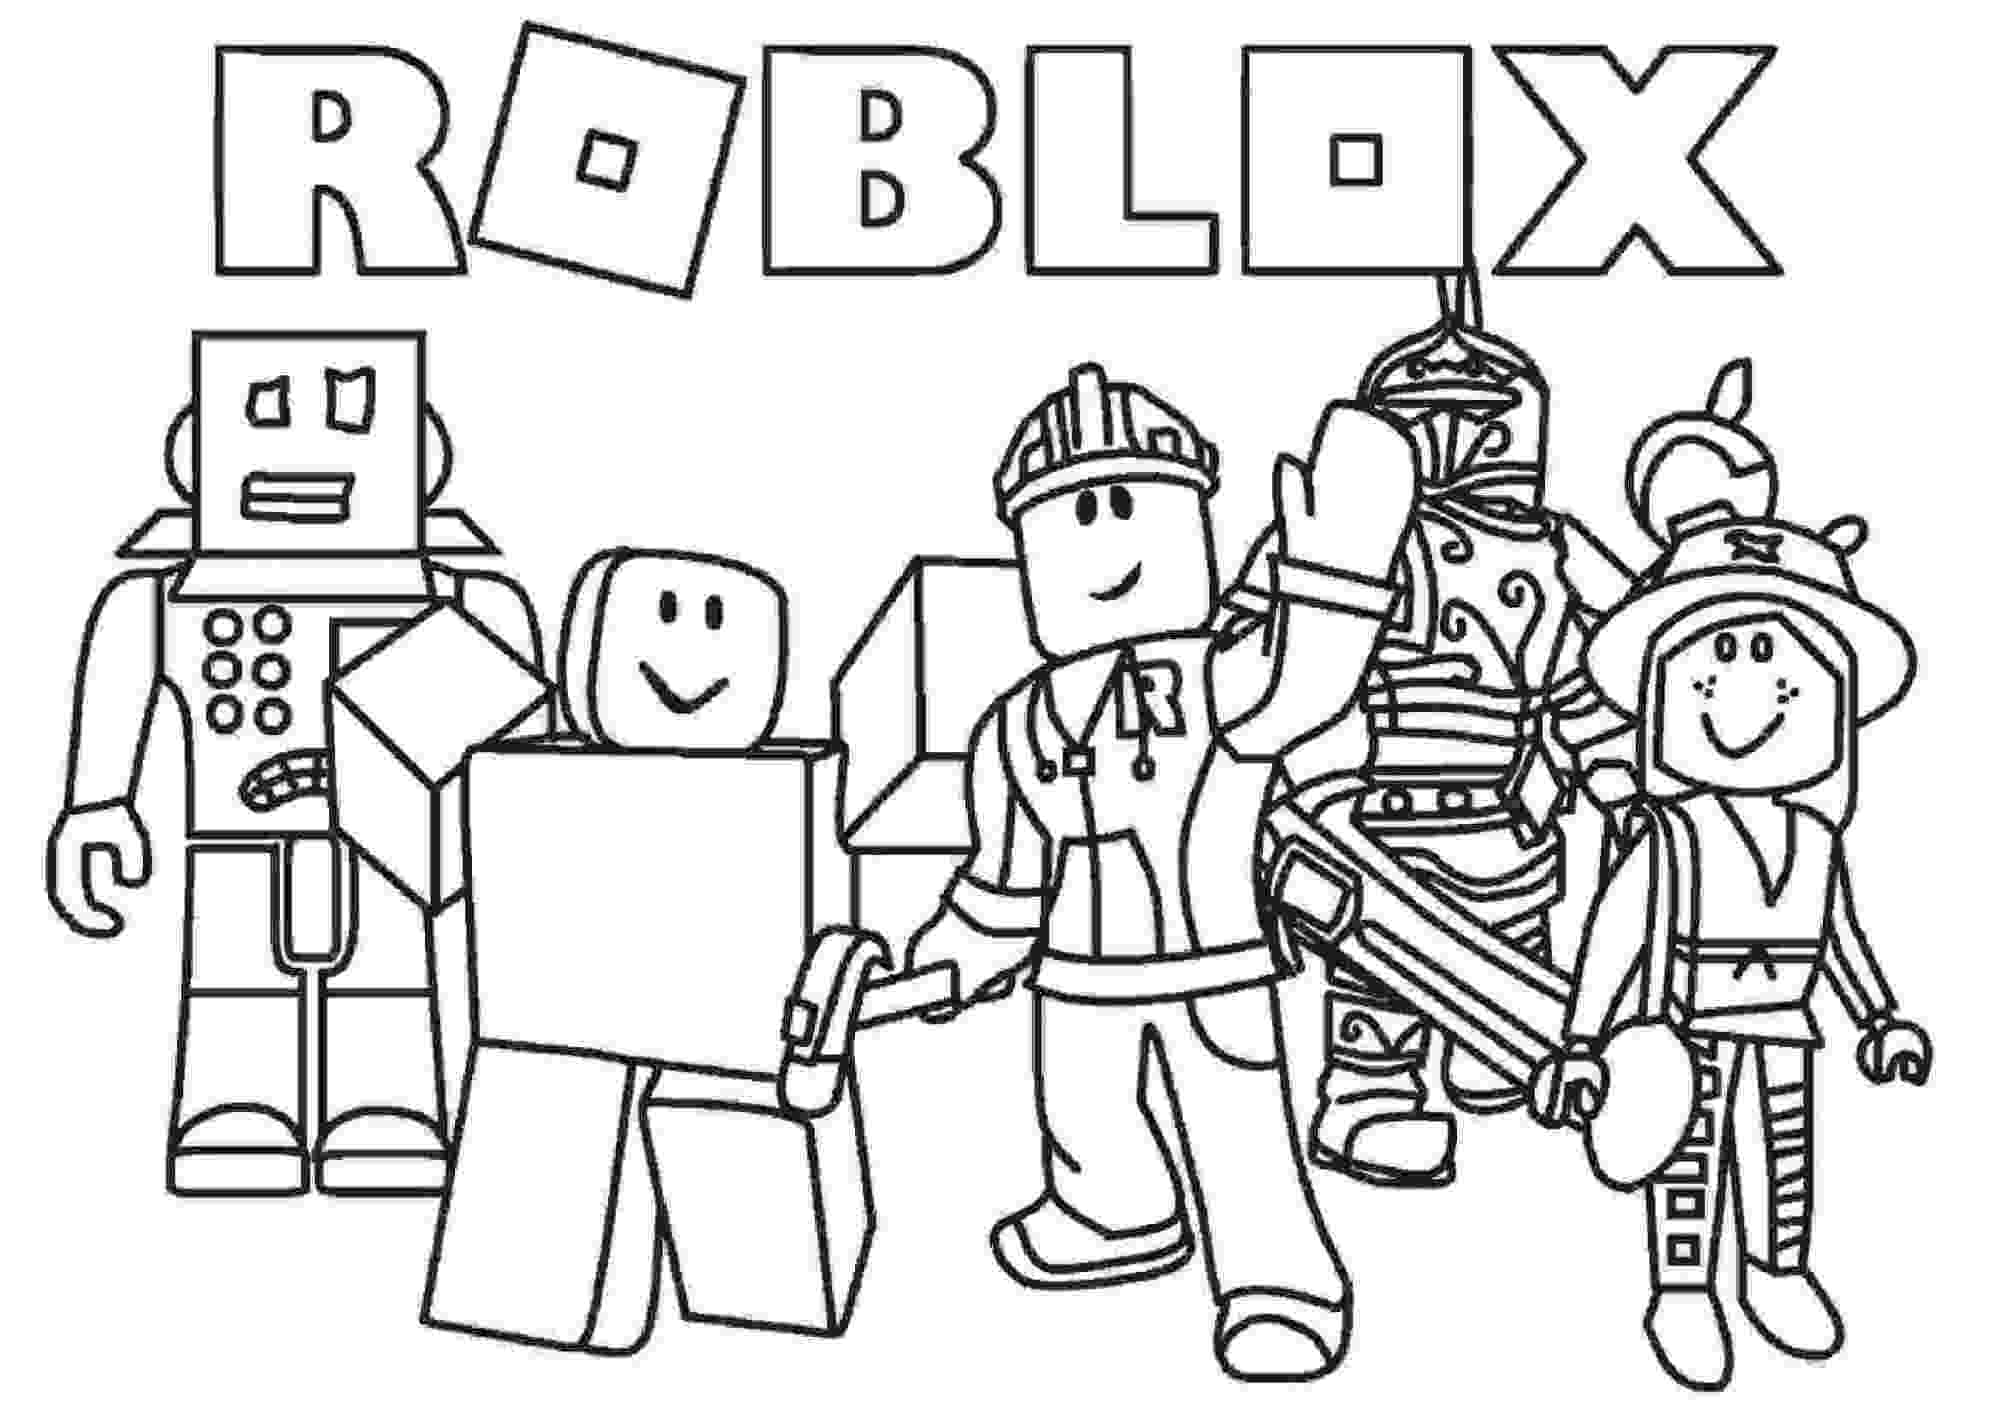 Roblox brookhaven #3